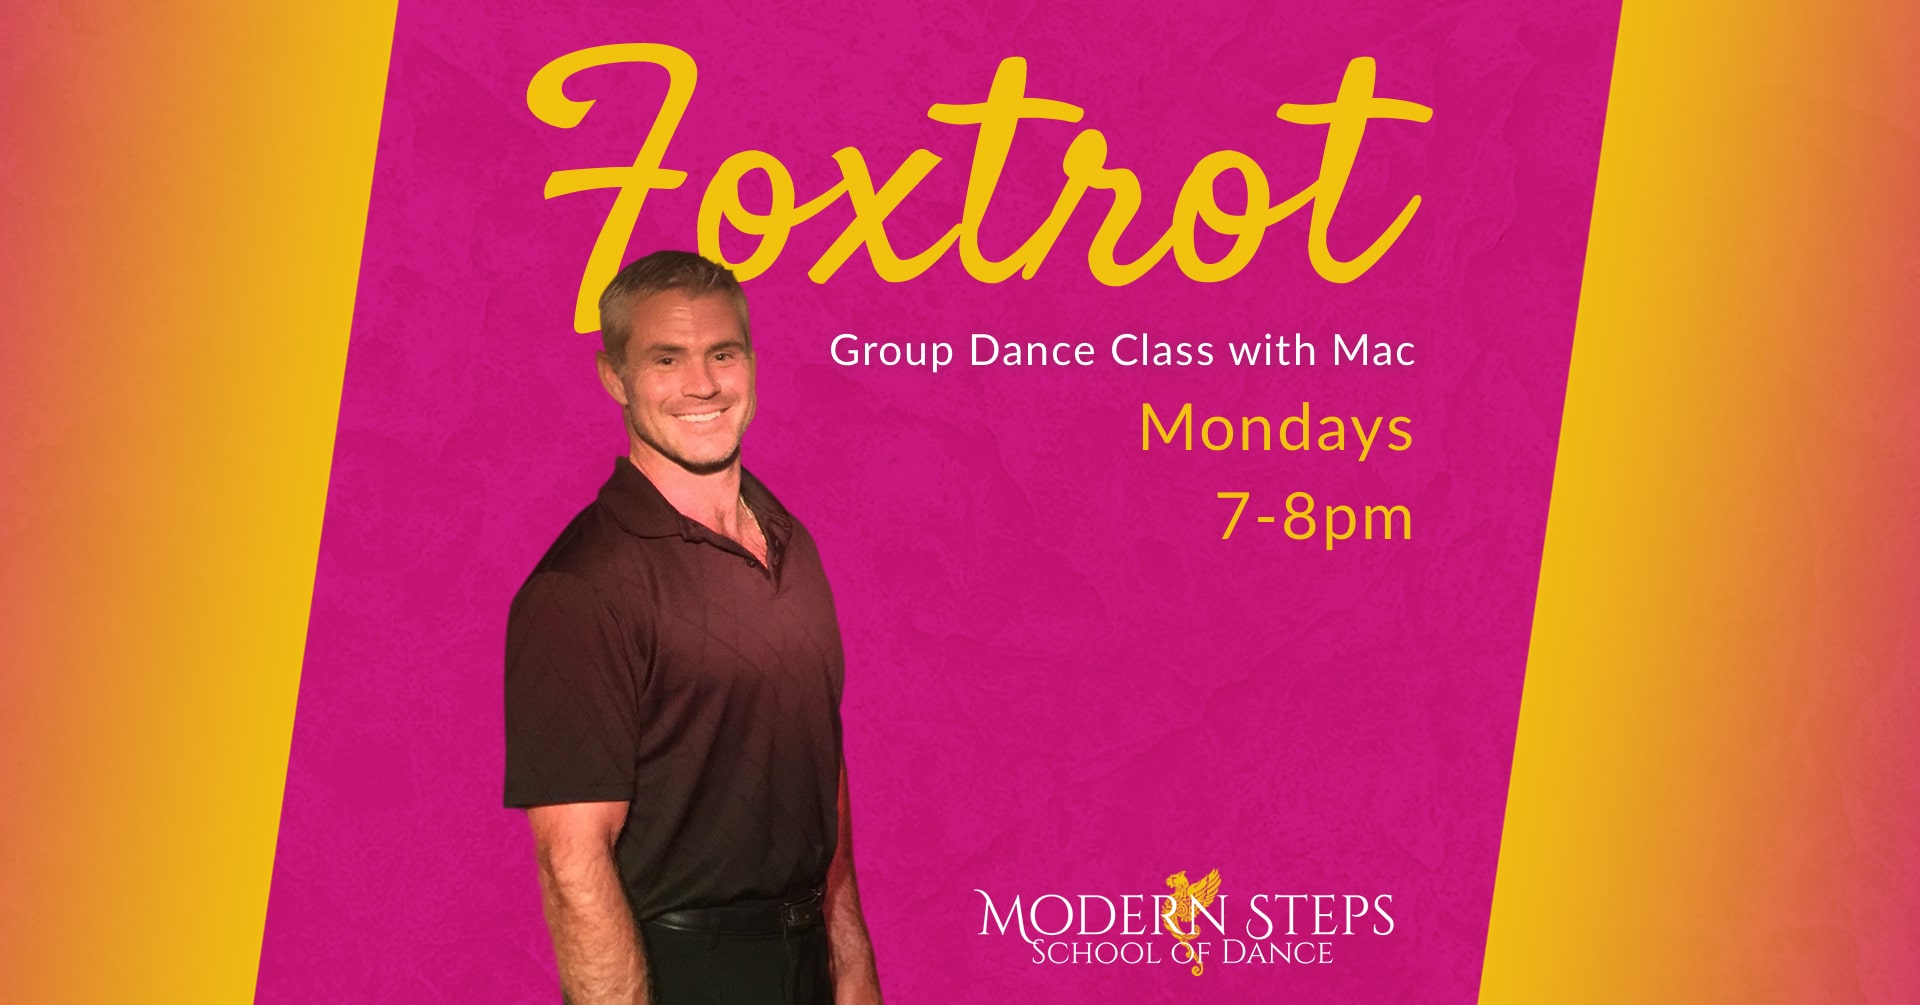 Modern Steps School of Dance Naples Florida The Foxtrot Dance Classes - Group Ballroom Dance Lessons - Naples Florida Things to Do